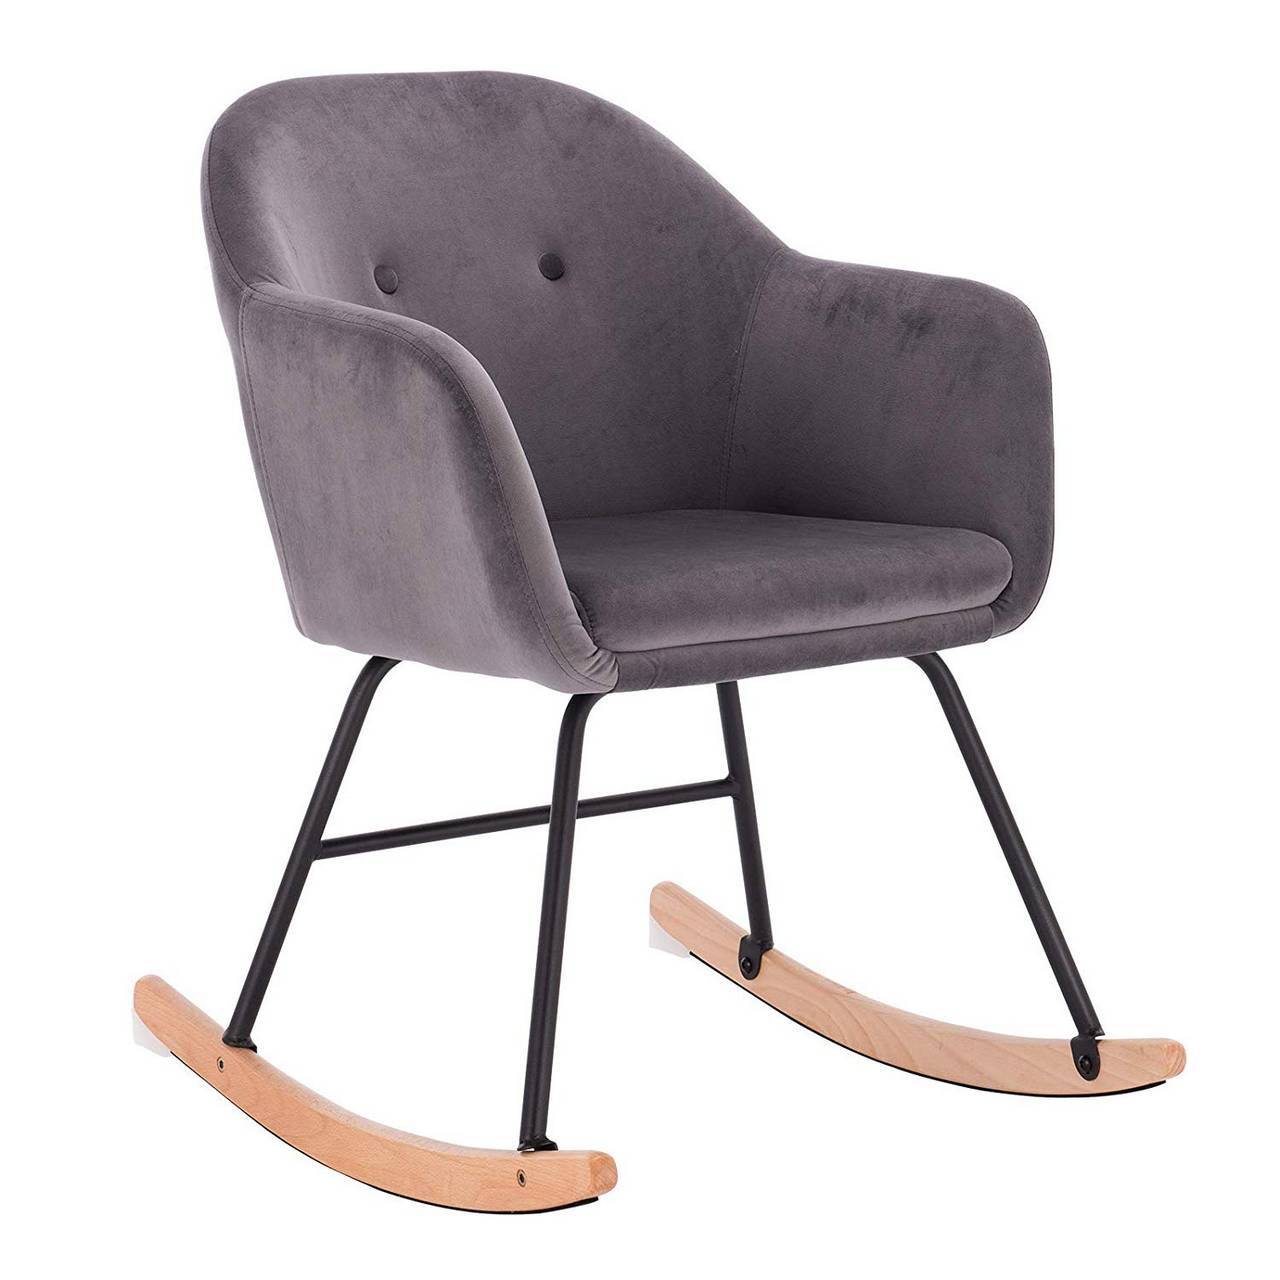 WOLTU Rocking Chair Light Grey Rocker Relax Chair Lounge Chair Recliner Relaxing Chair Linen with Comfortable Padded Seat 